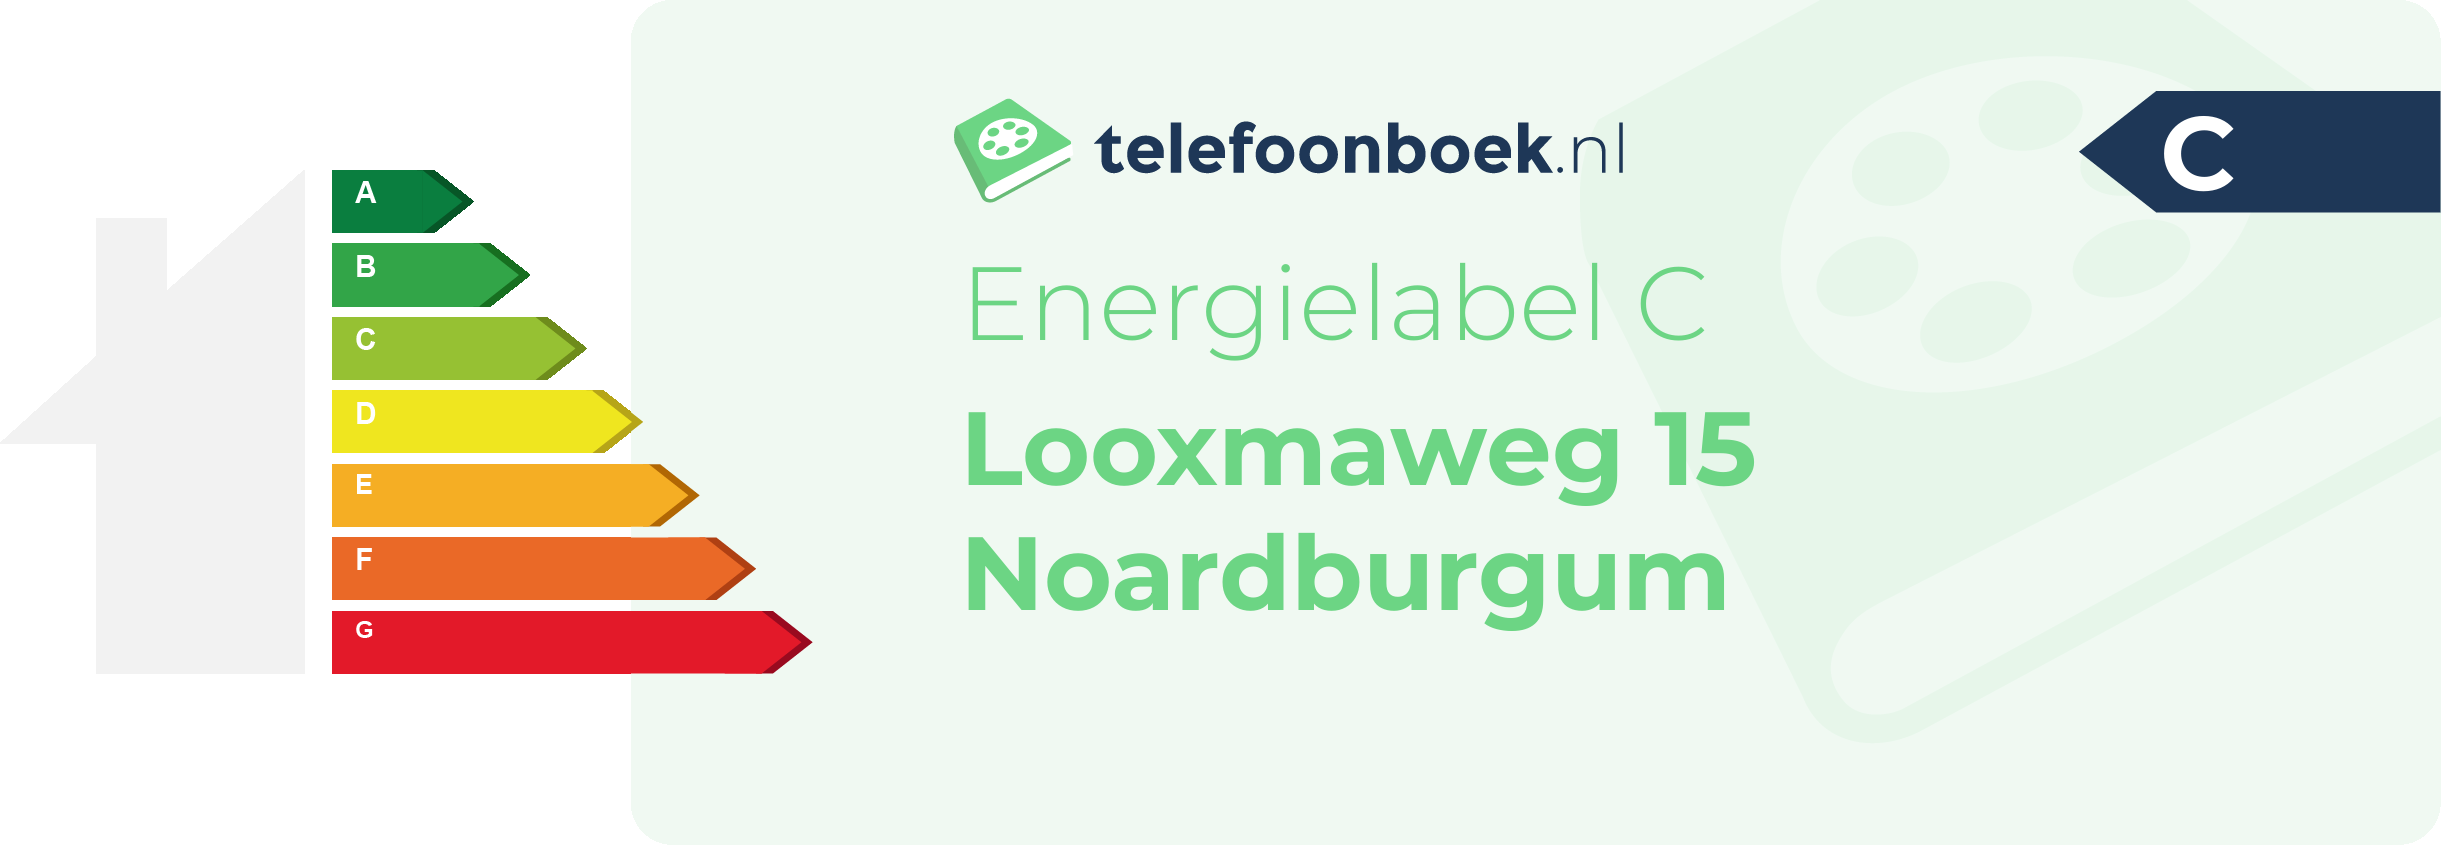 Energielabel Looxmaweg 15 Noardburgum